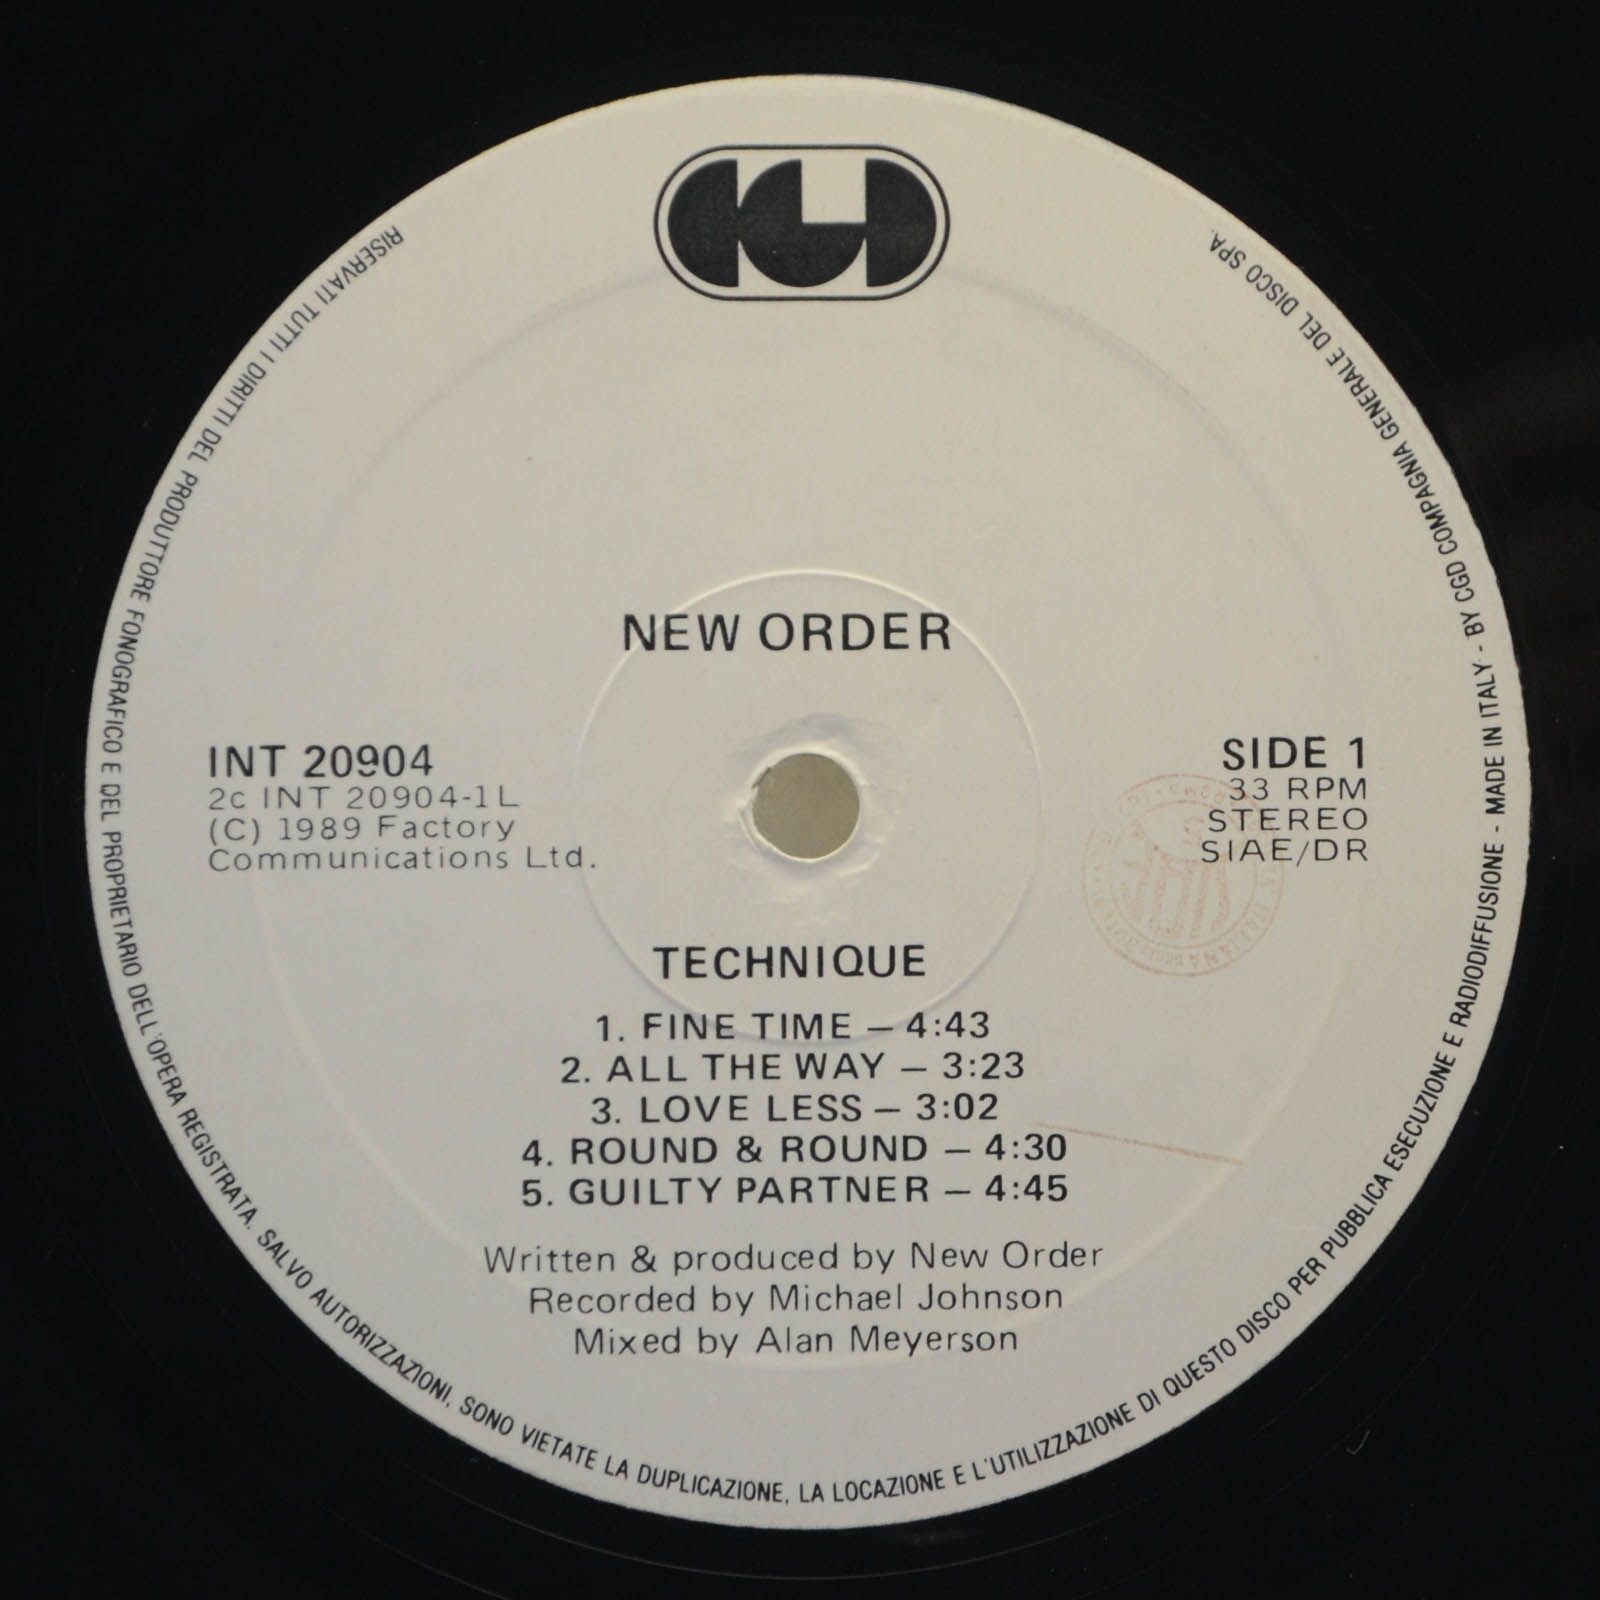 Neworder — Technique, 1989